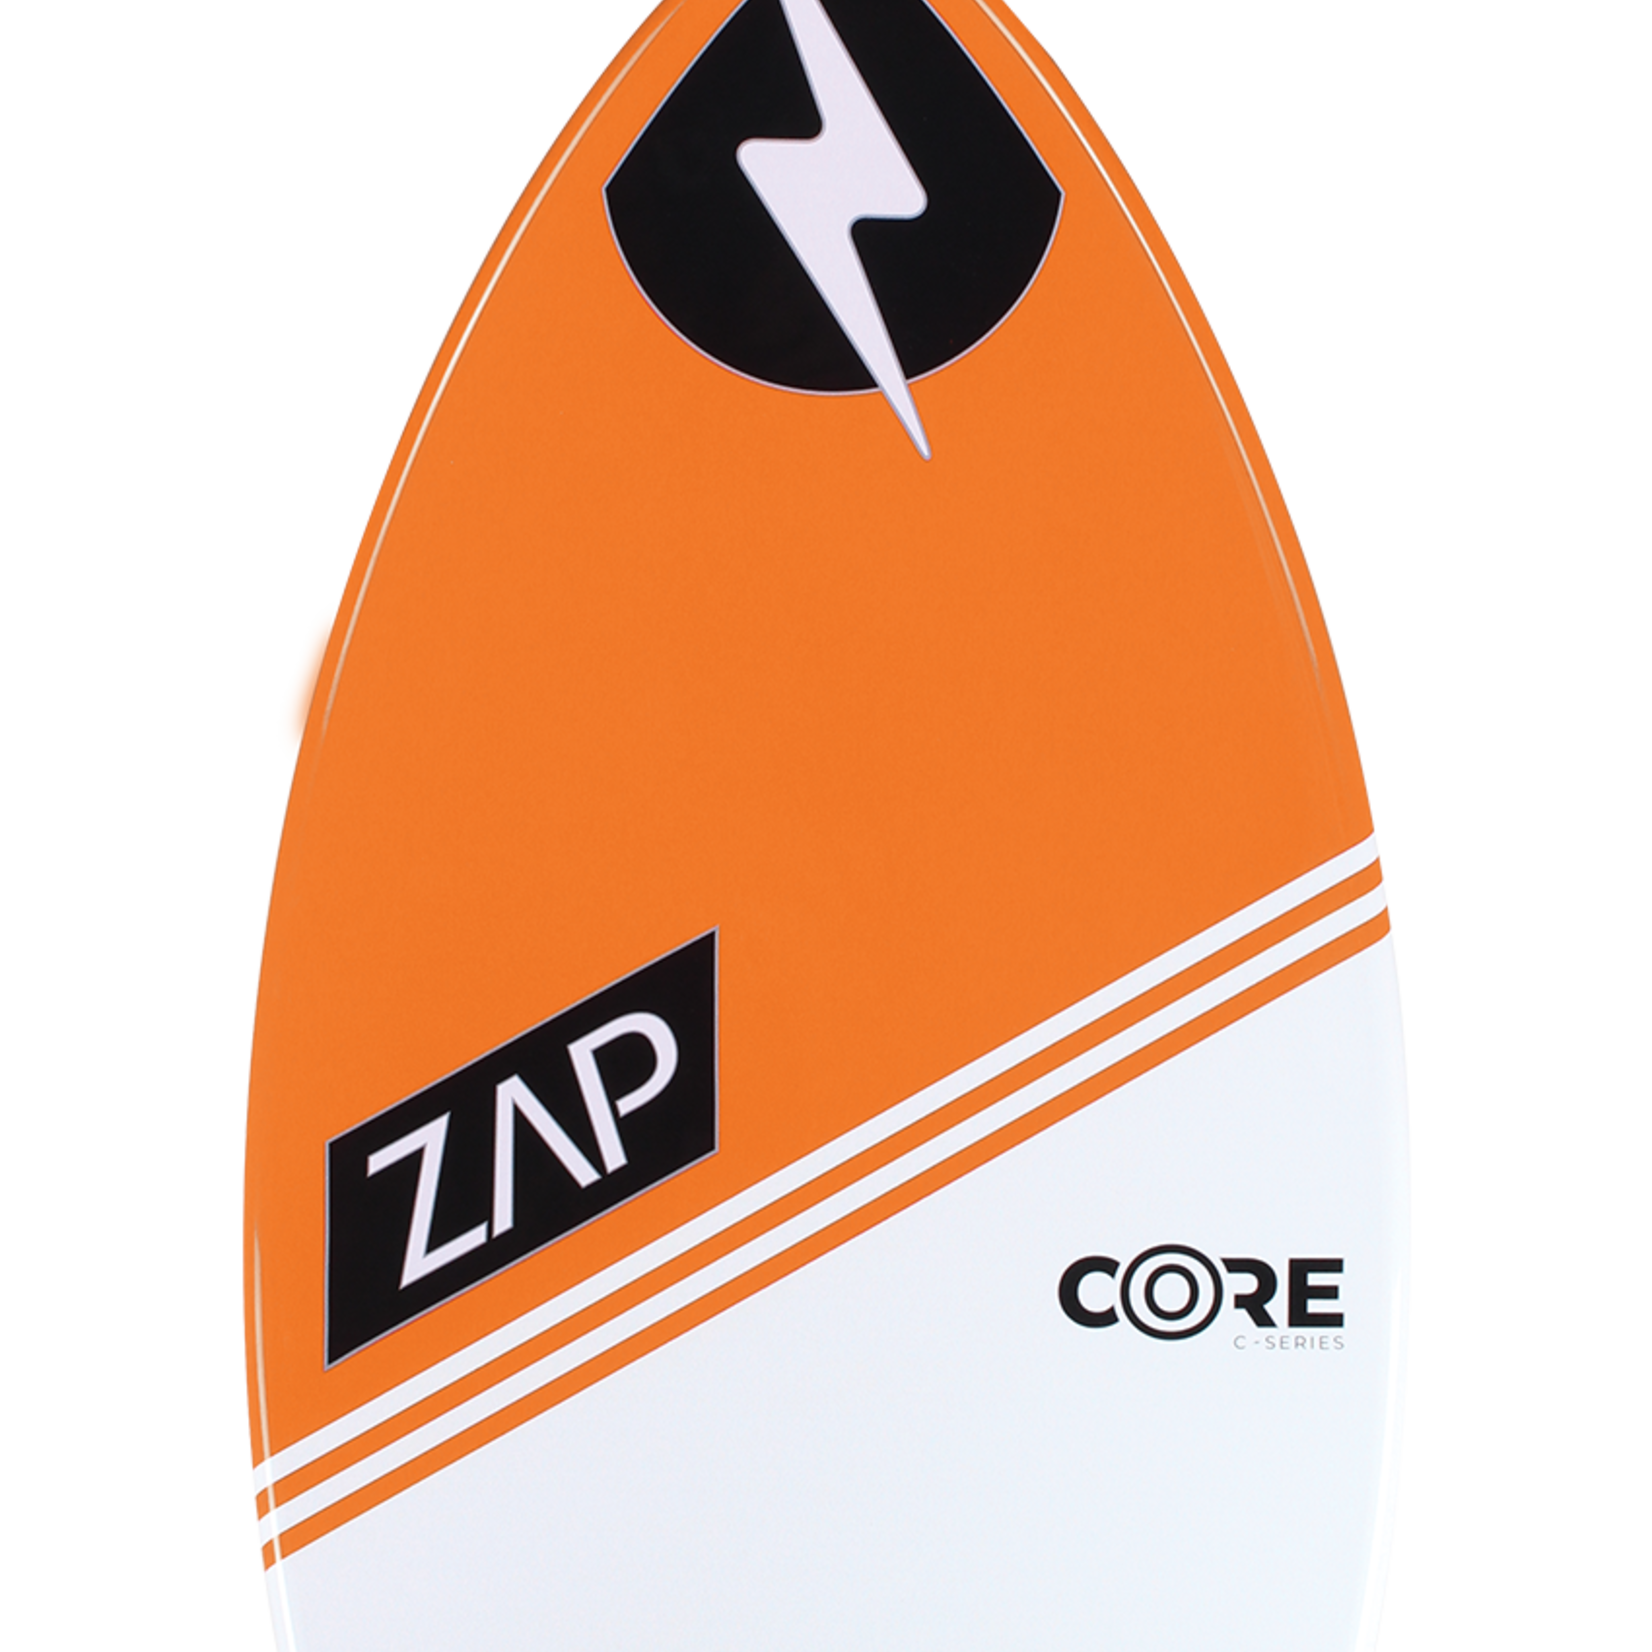 Zap Core - C series